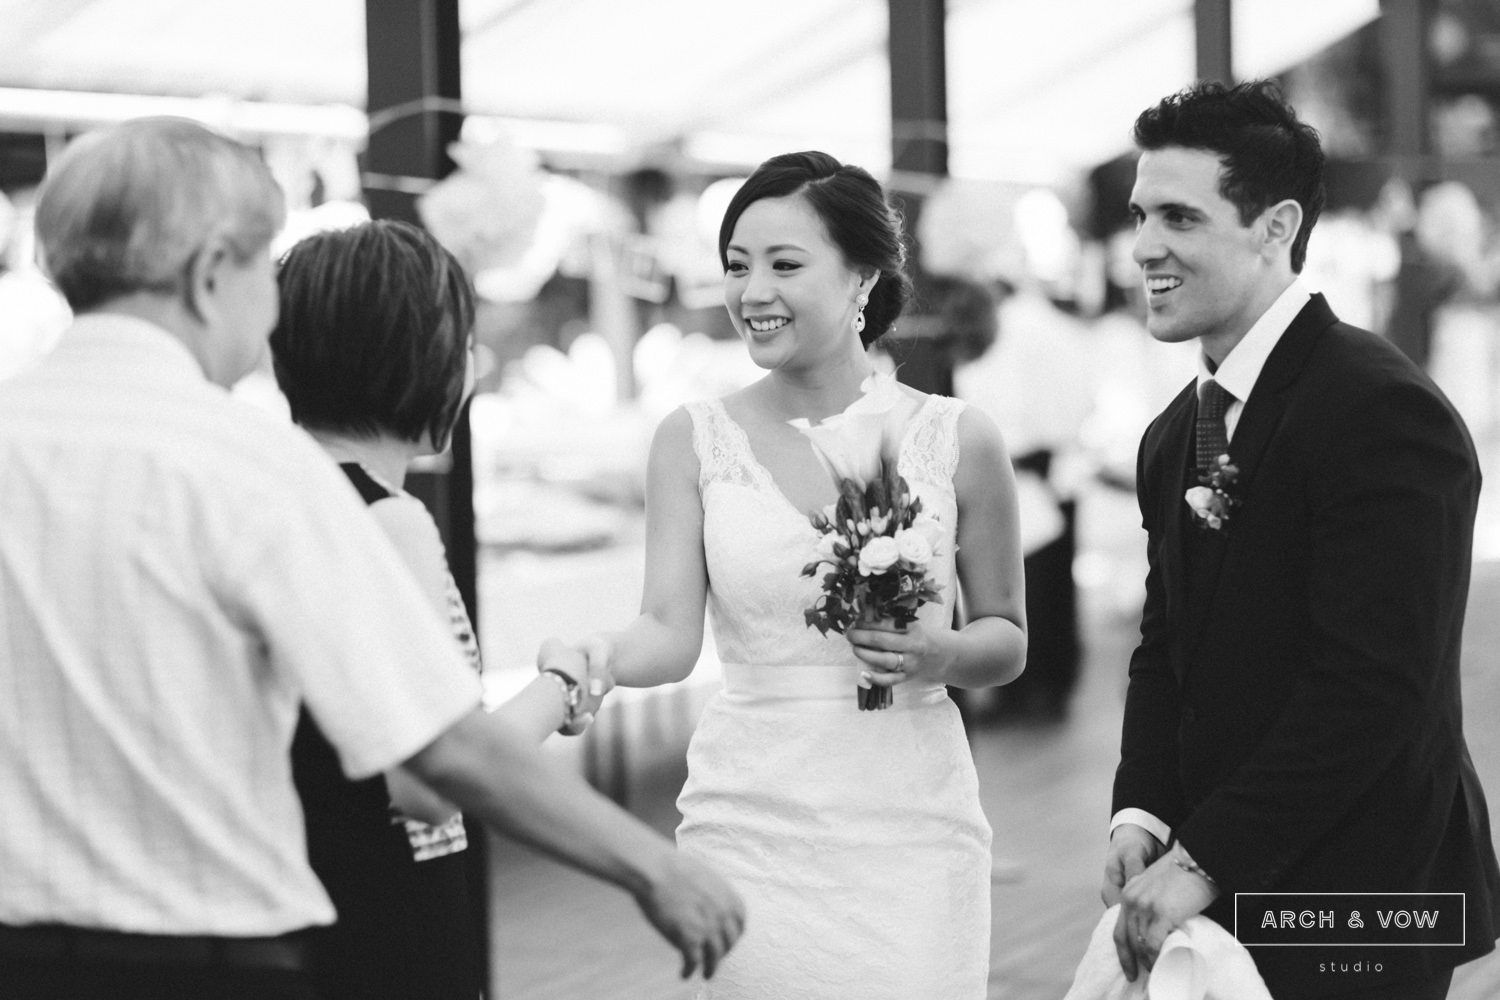 Filipe & Ee Han wedding singapore-074.jpg